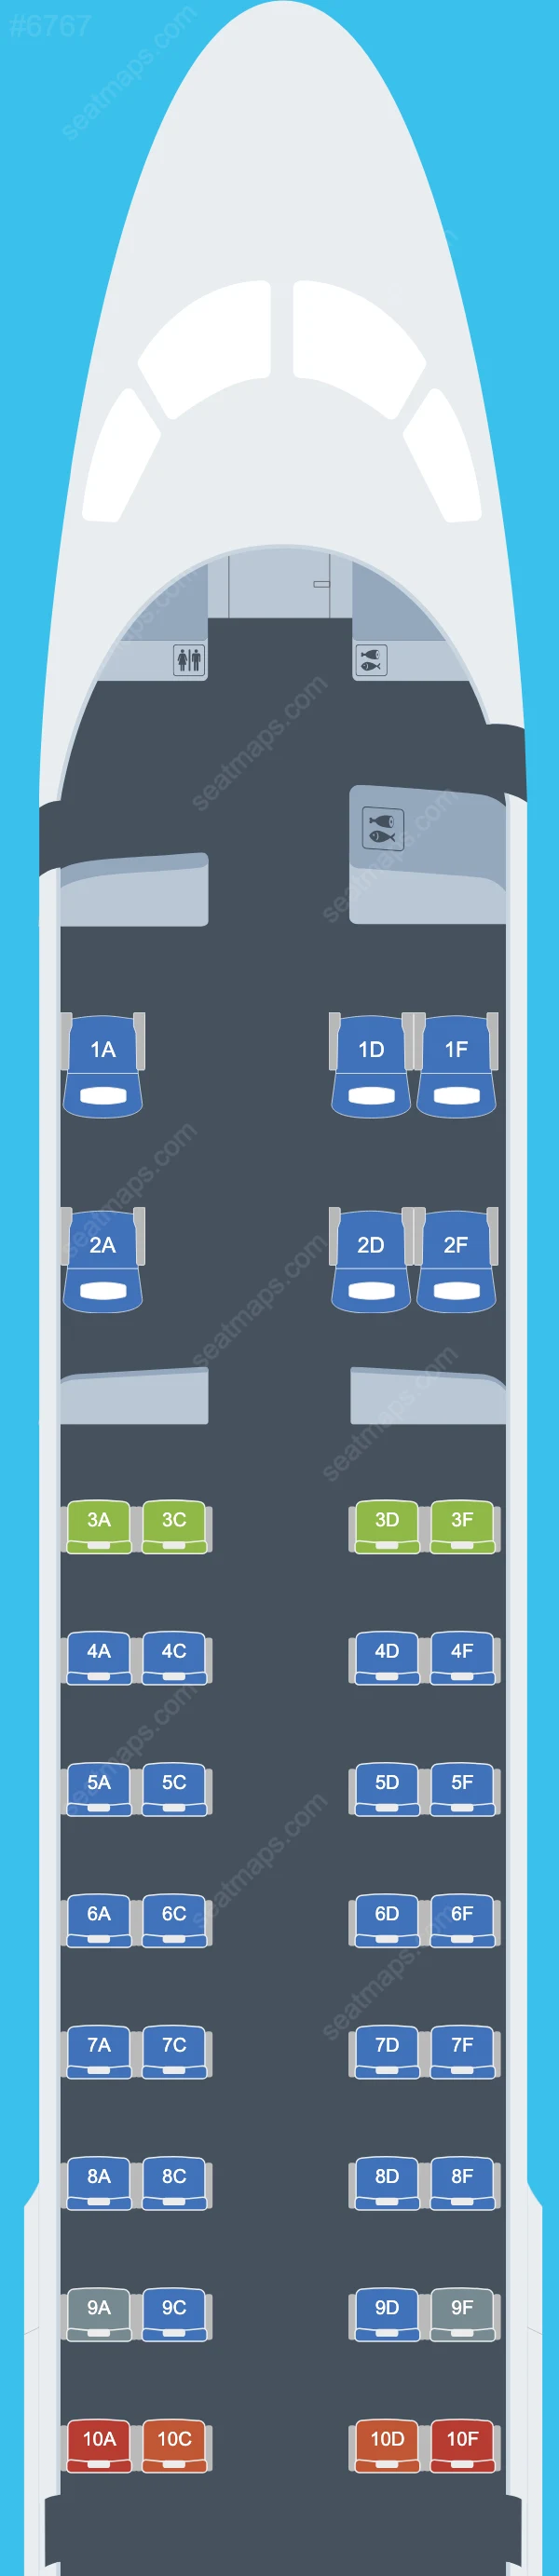 Airlink Embraer E190 Seat Maps E190